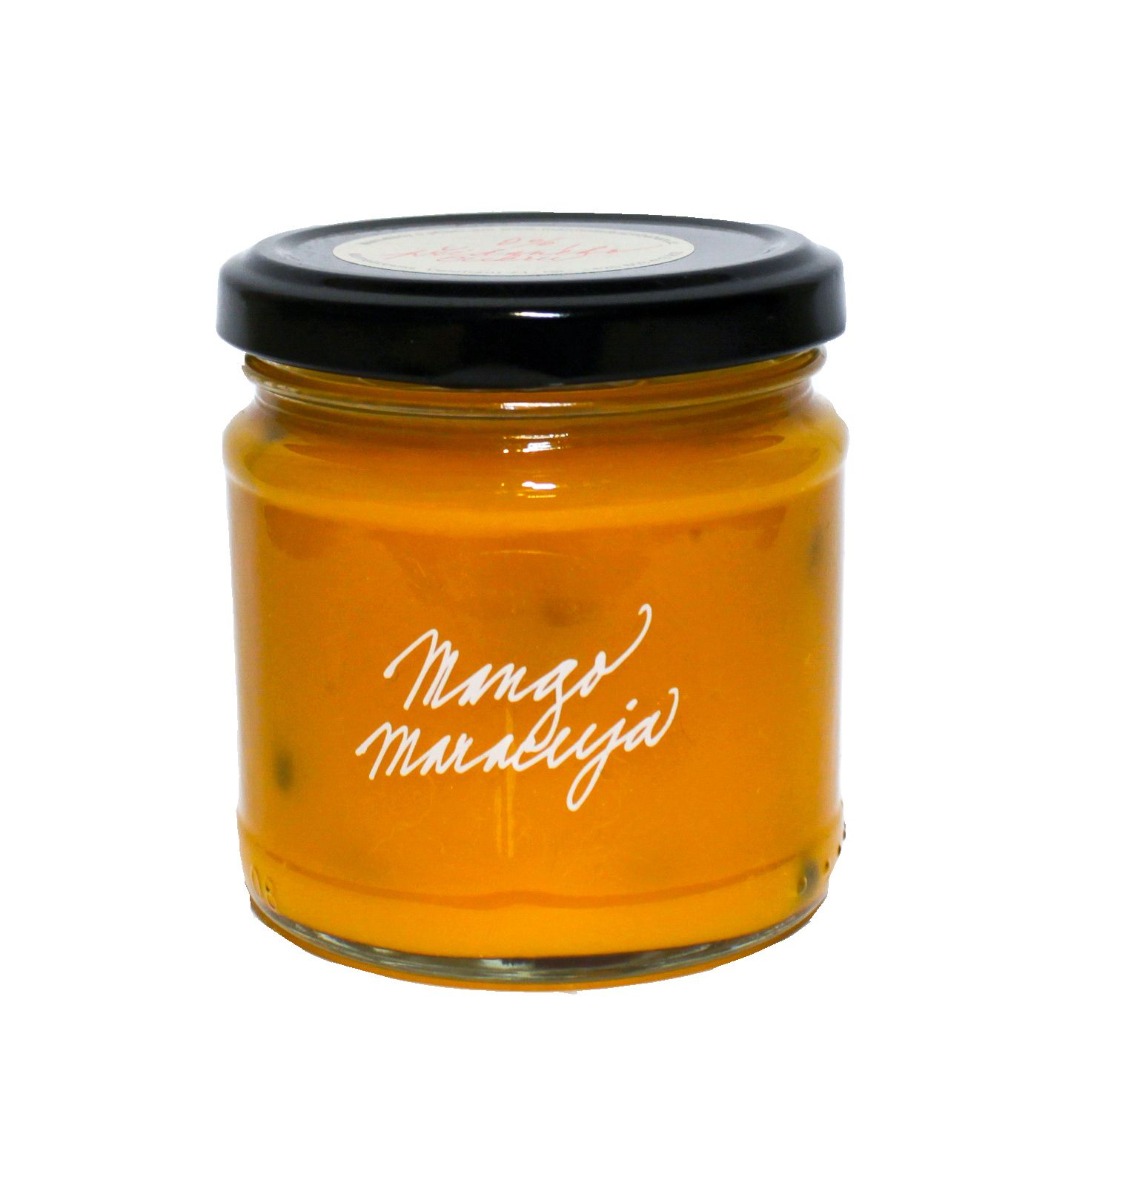 Marmelády s příběhem Mango-maracuja džem bez přidaného cukru 200 g Marmelády s příběhem